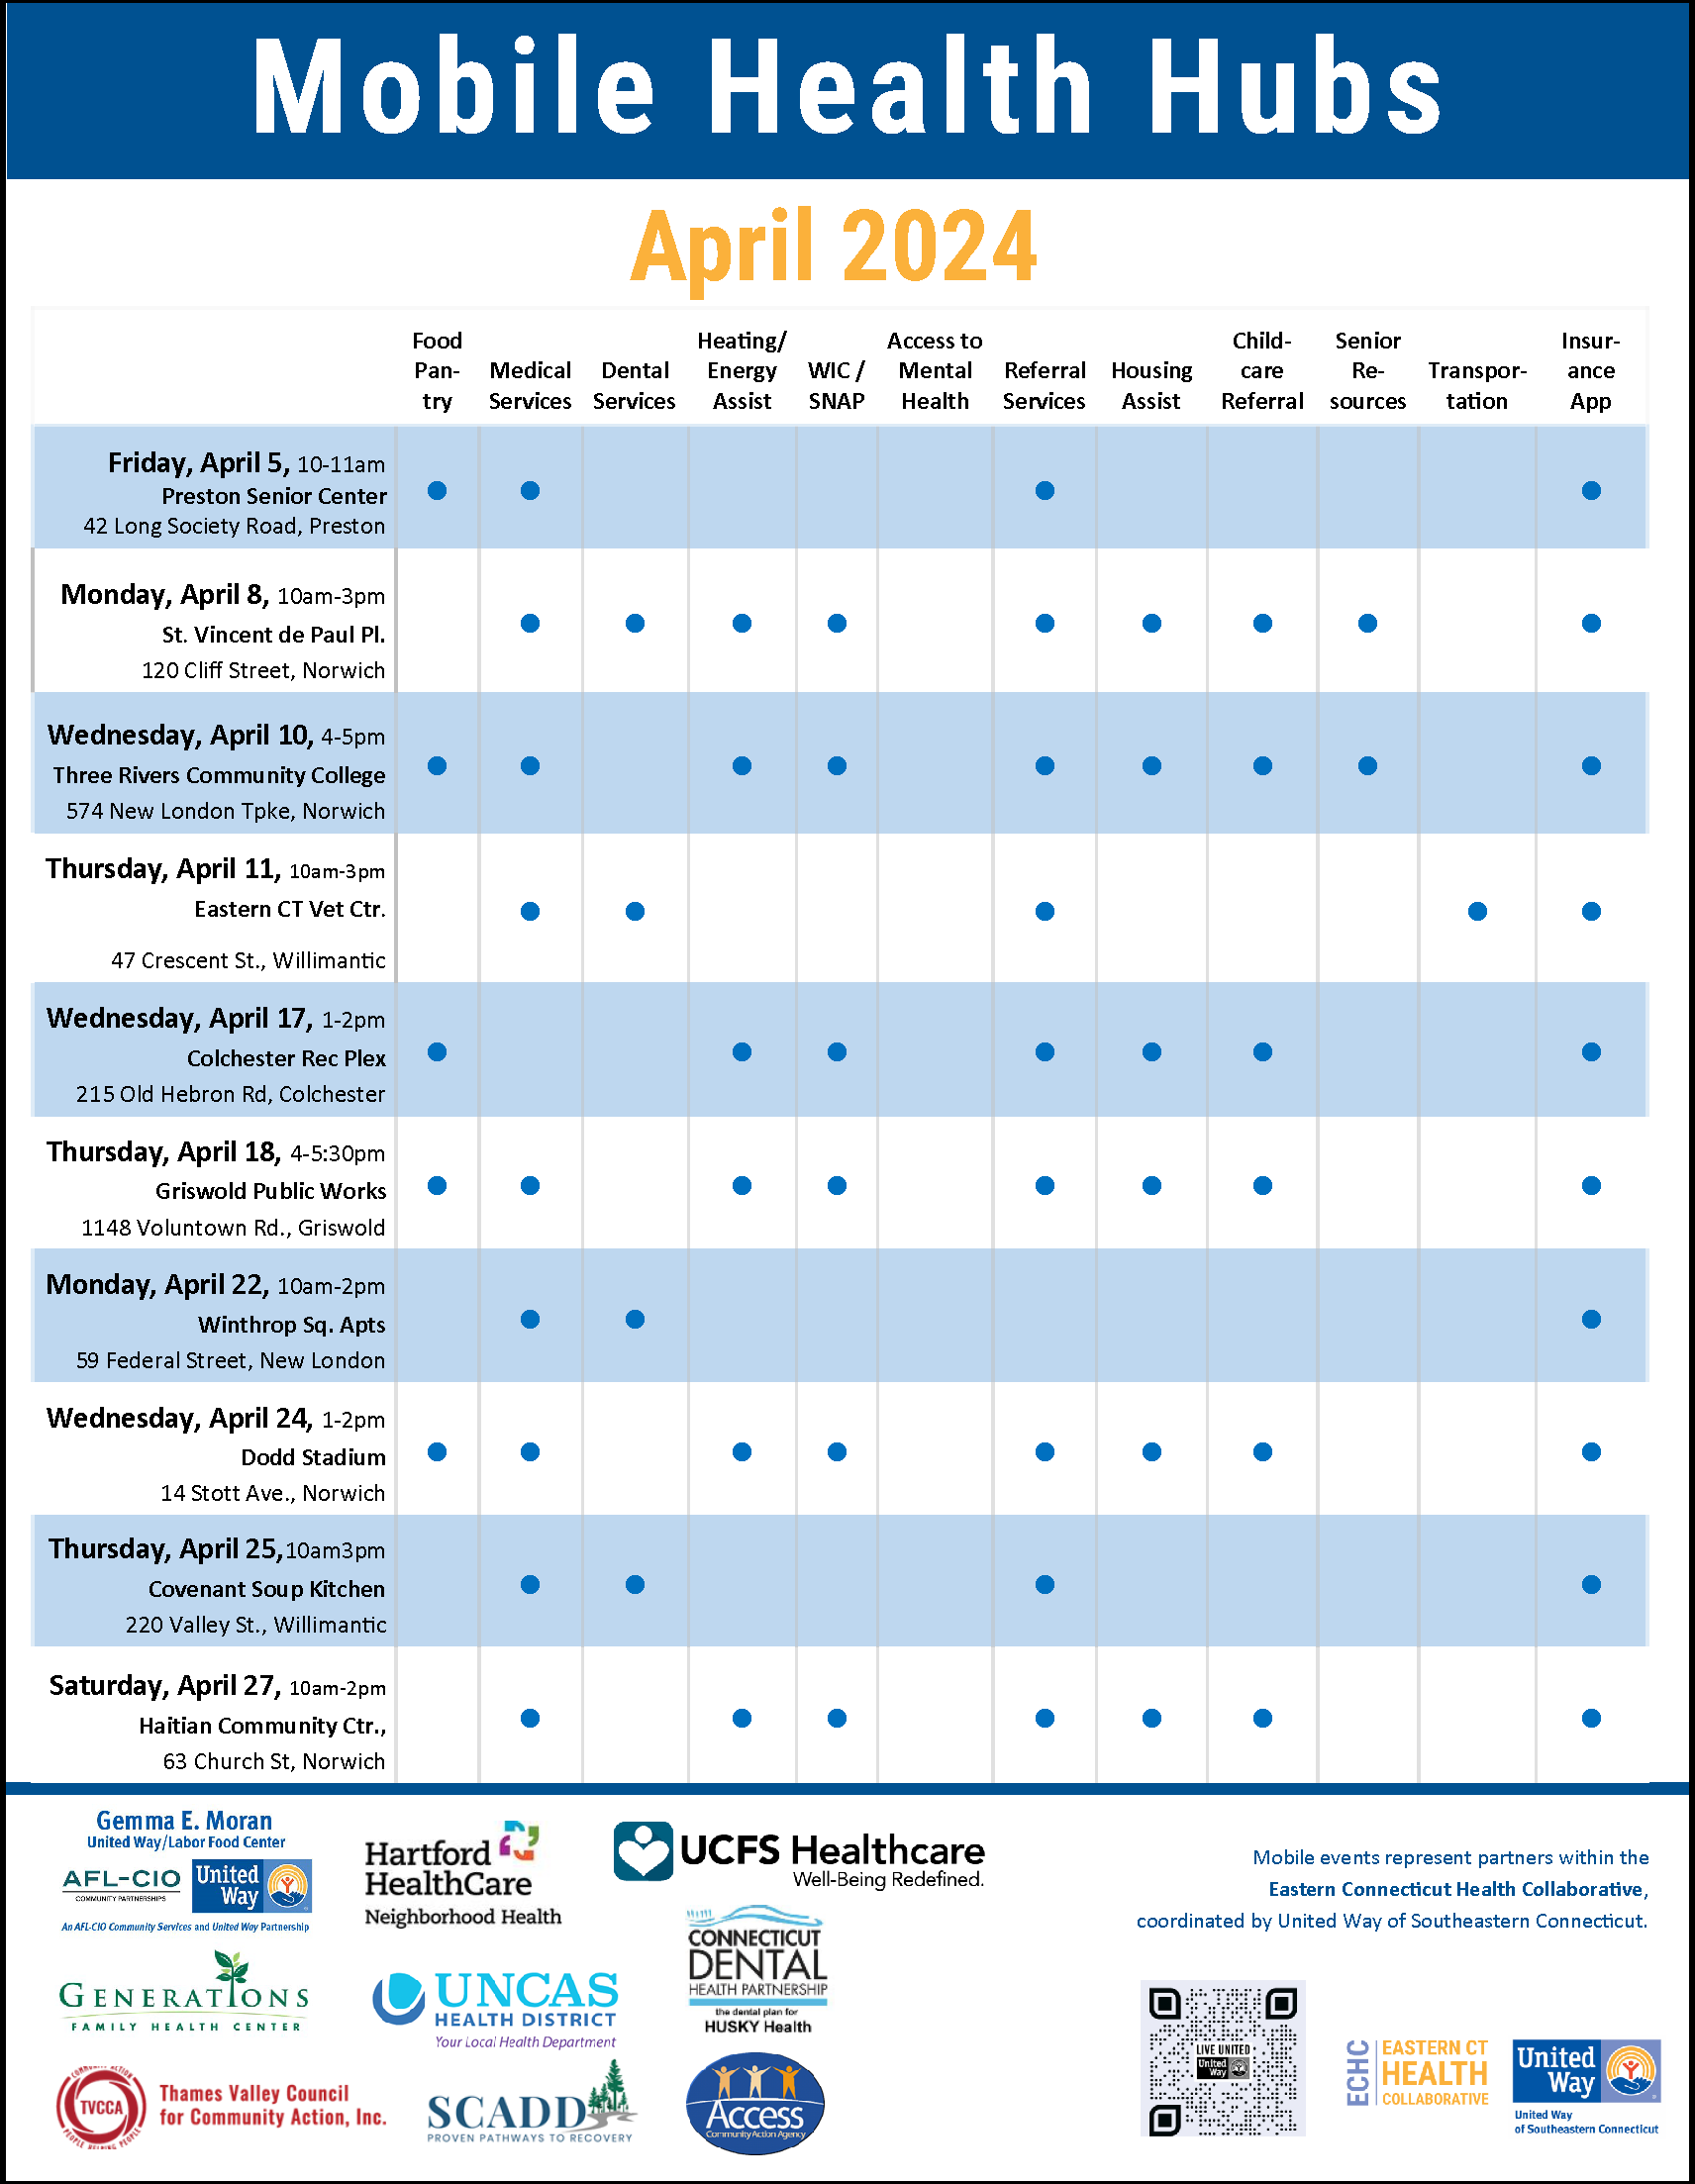 Mobile Health Hub schedule